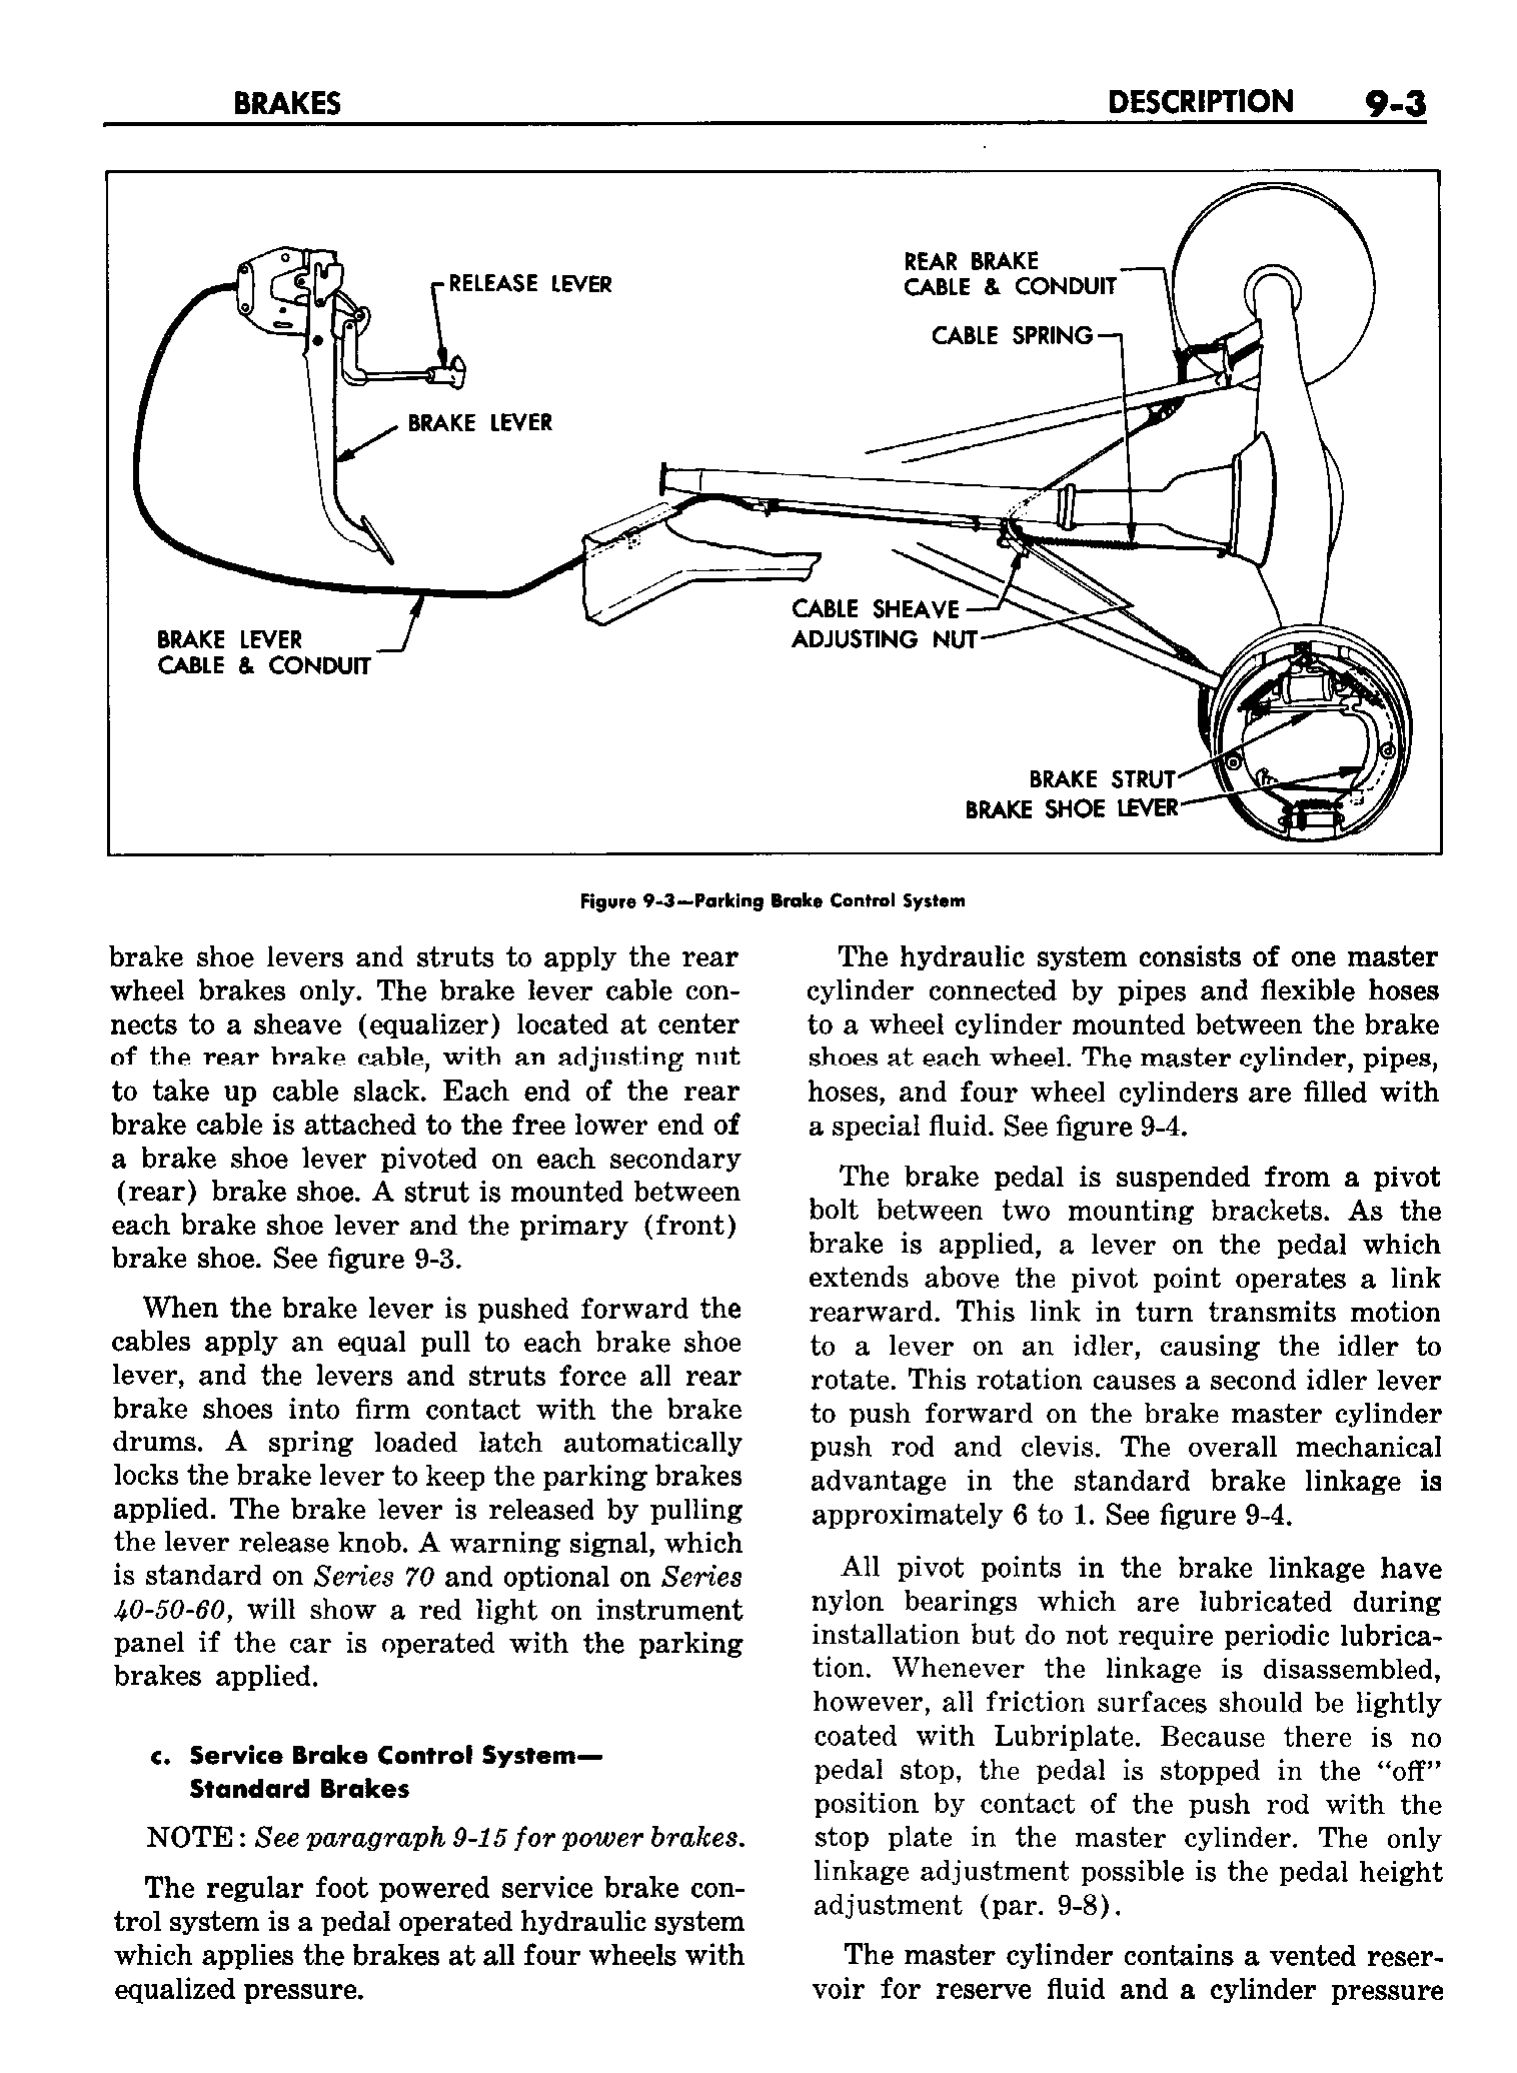 n_10 1958 Buick Shop Manual - Brakes_3.jpg